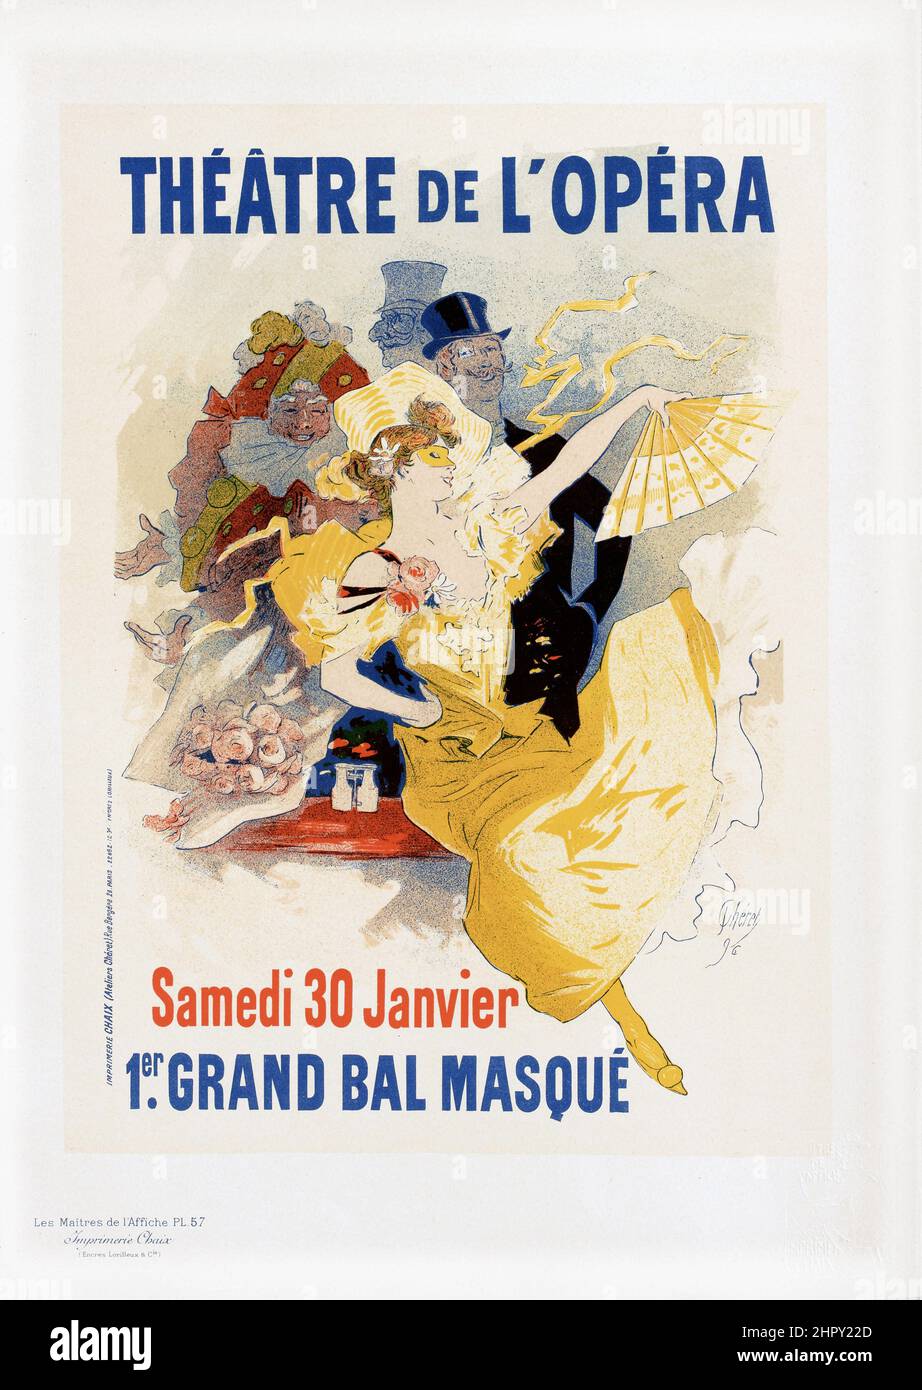 Maitres de l'affiche Vol 2 - Plato 57 - Jules Cheret. 1895. 'Theatre de L'Opera' 1er Grand Bal Masque. Foto de stock